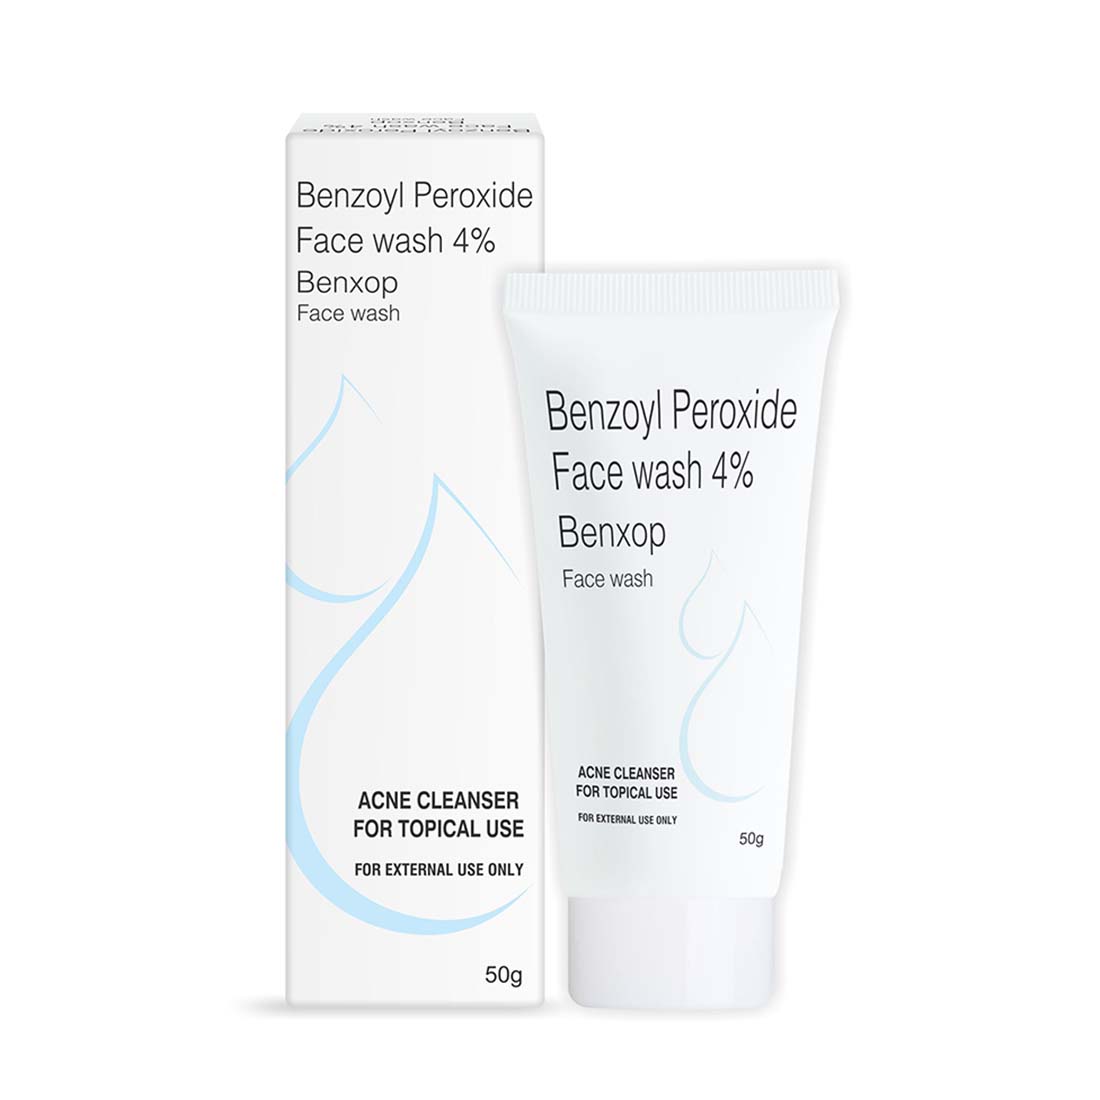 Benxop Face wash